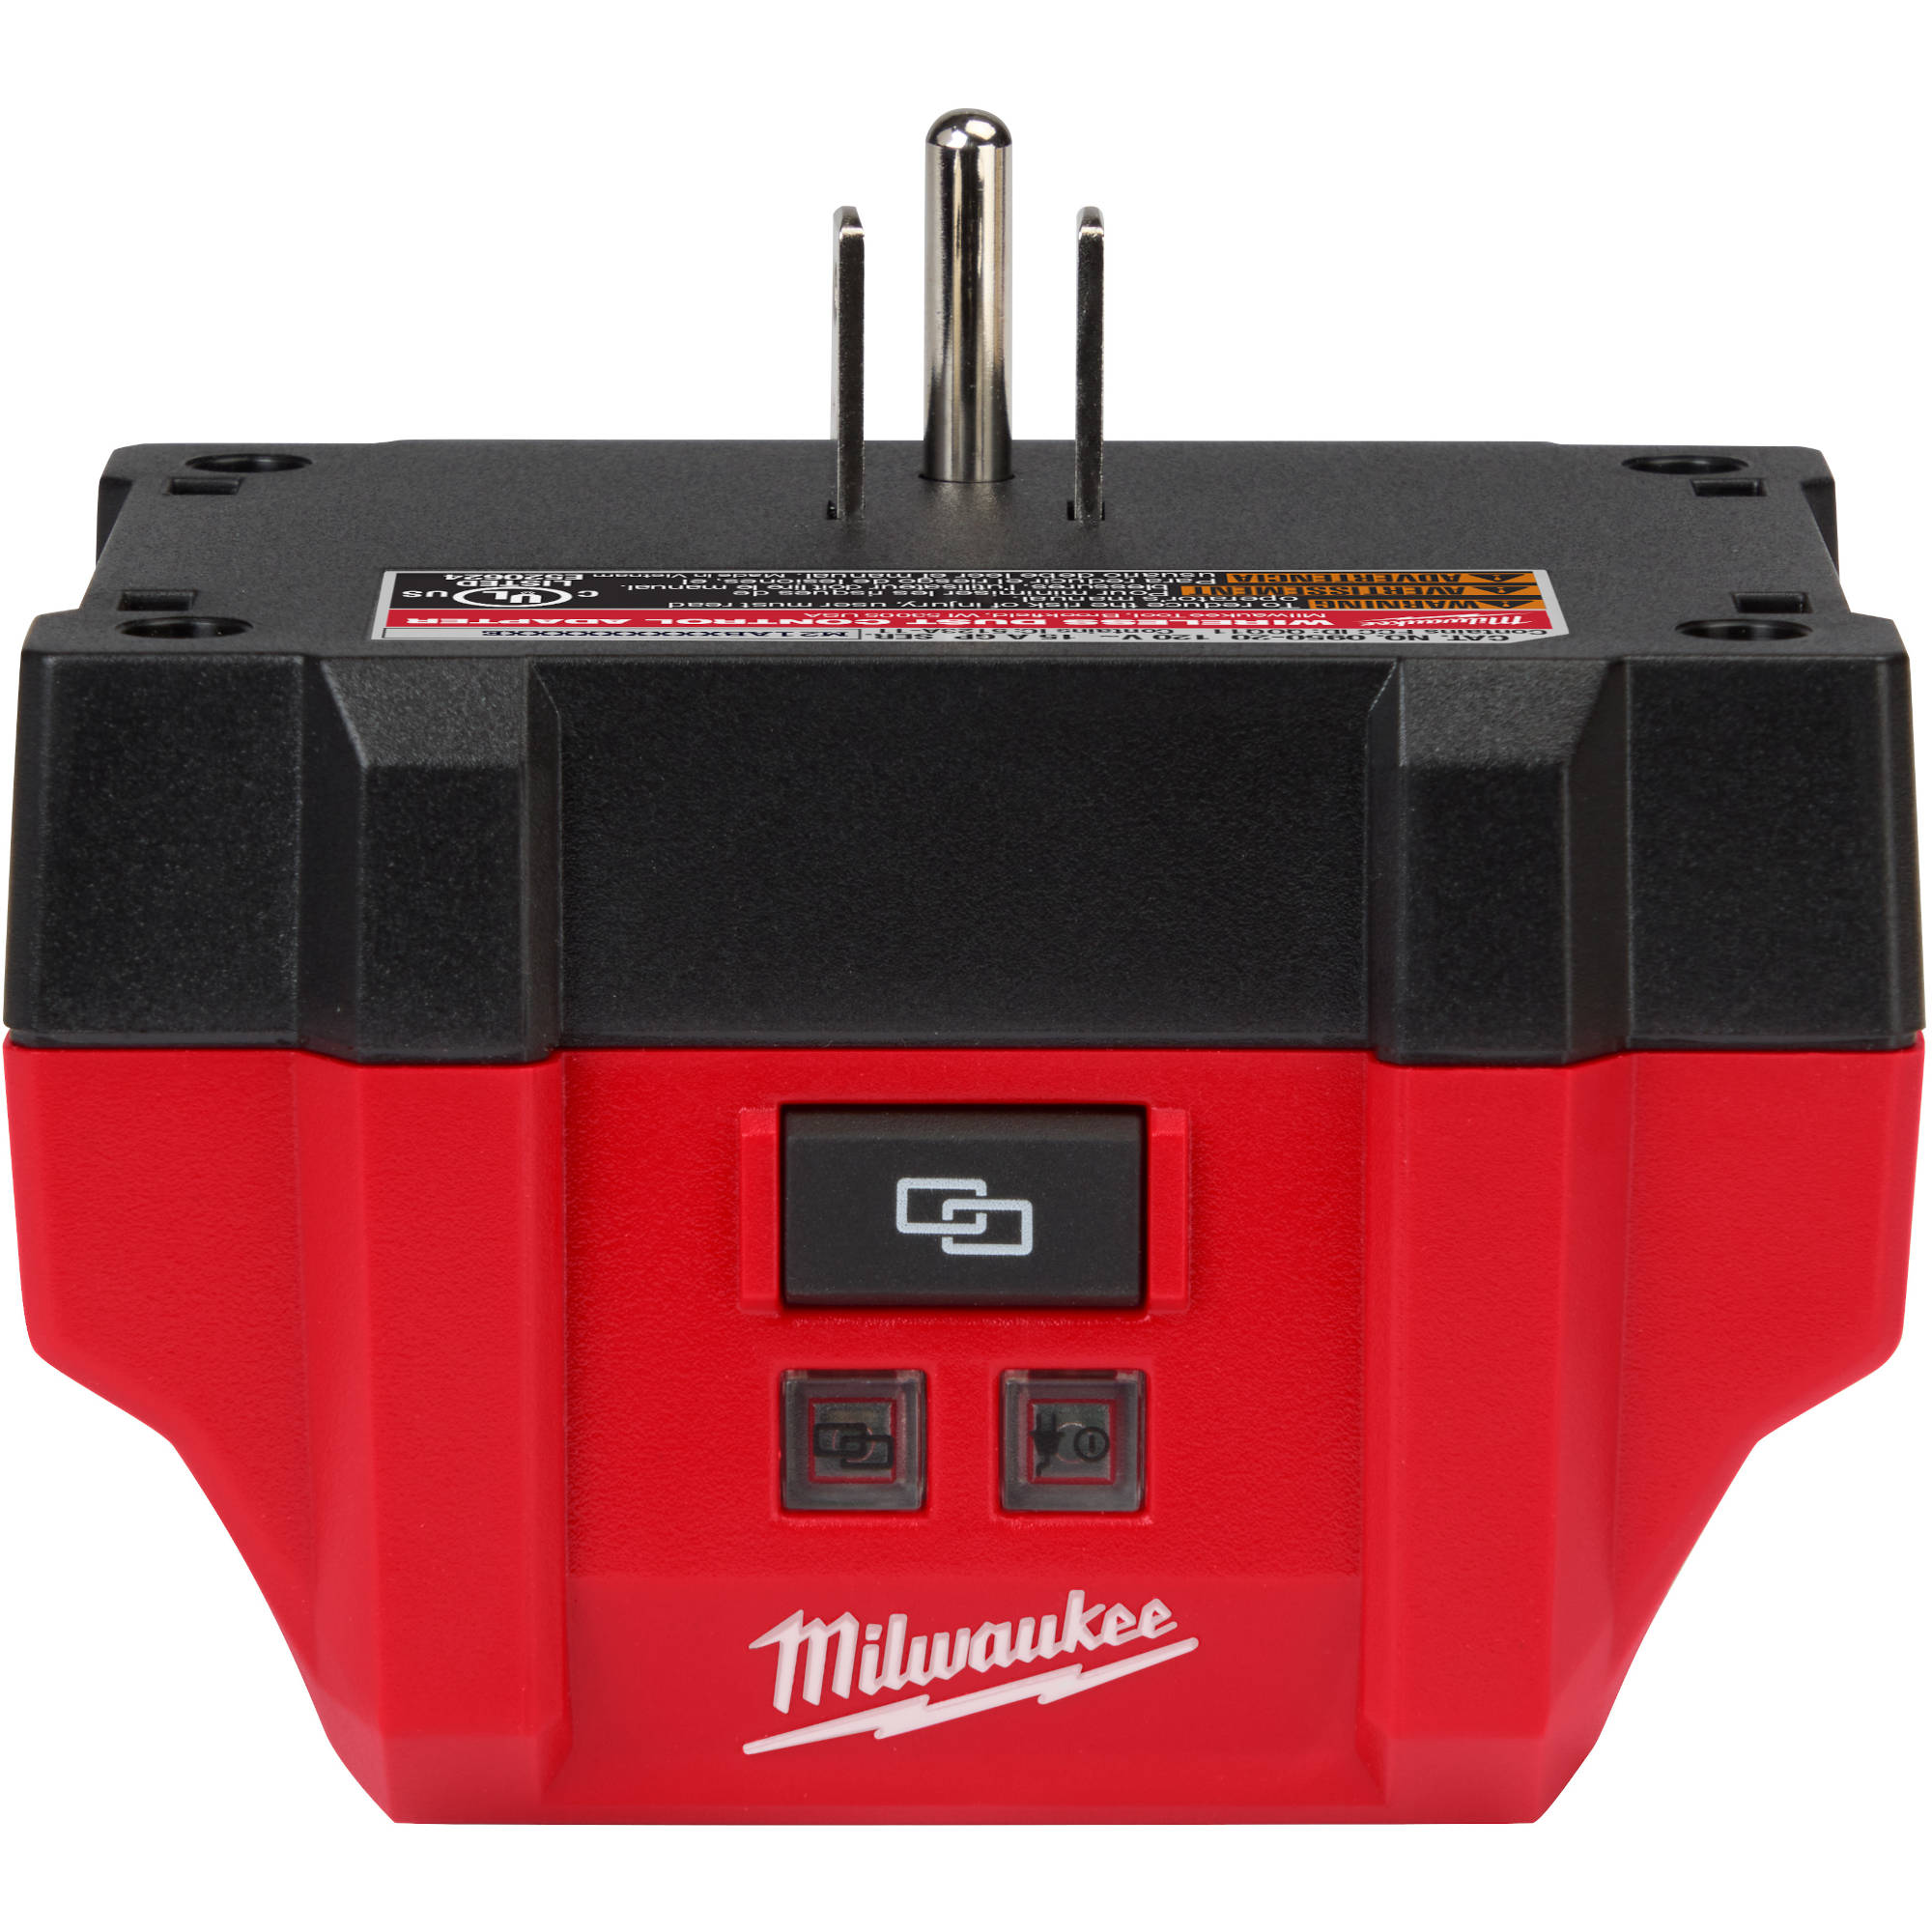 0950-20 Milwaukee Wireless Dust Control Adapter & Remote Kit 7